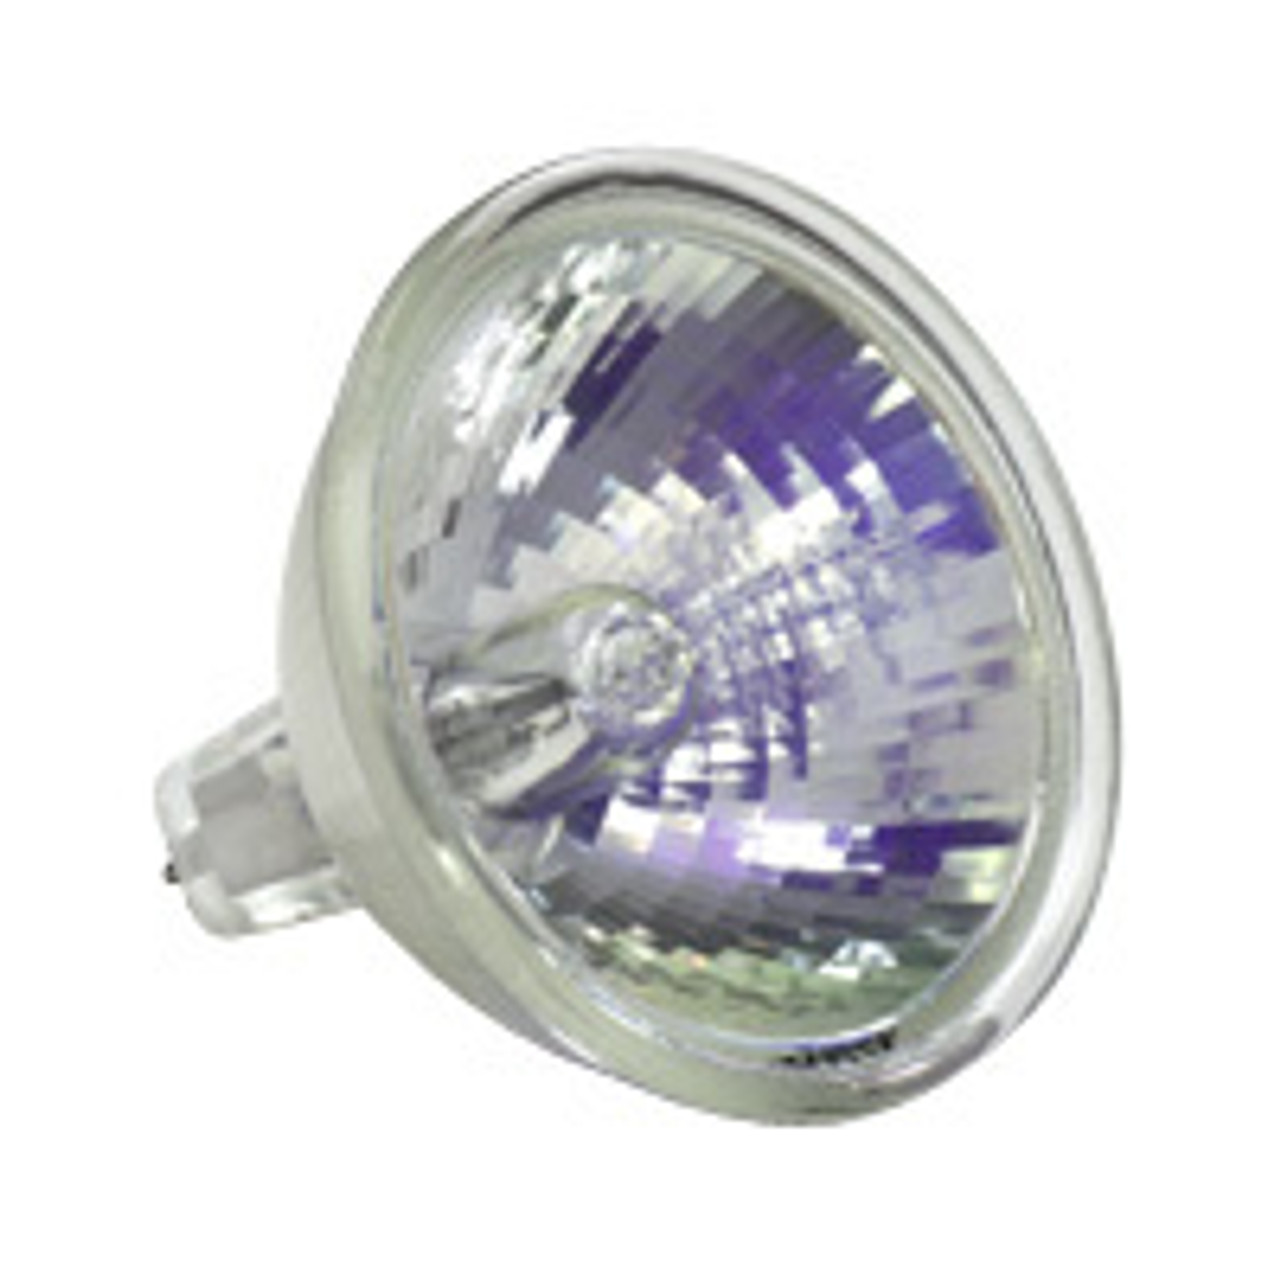 MR13 Light Bulbs